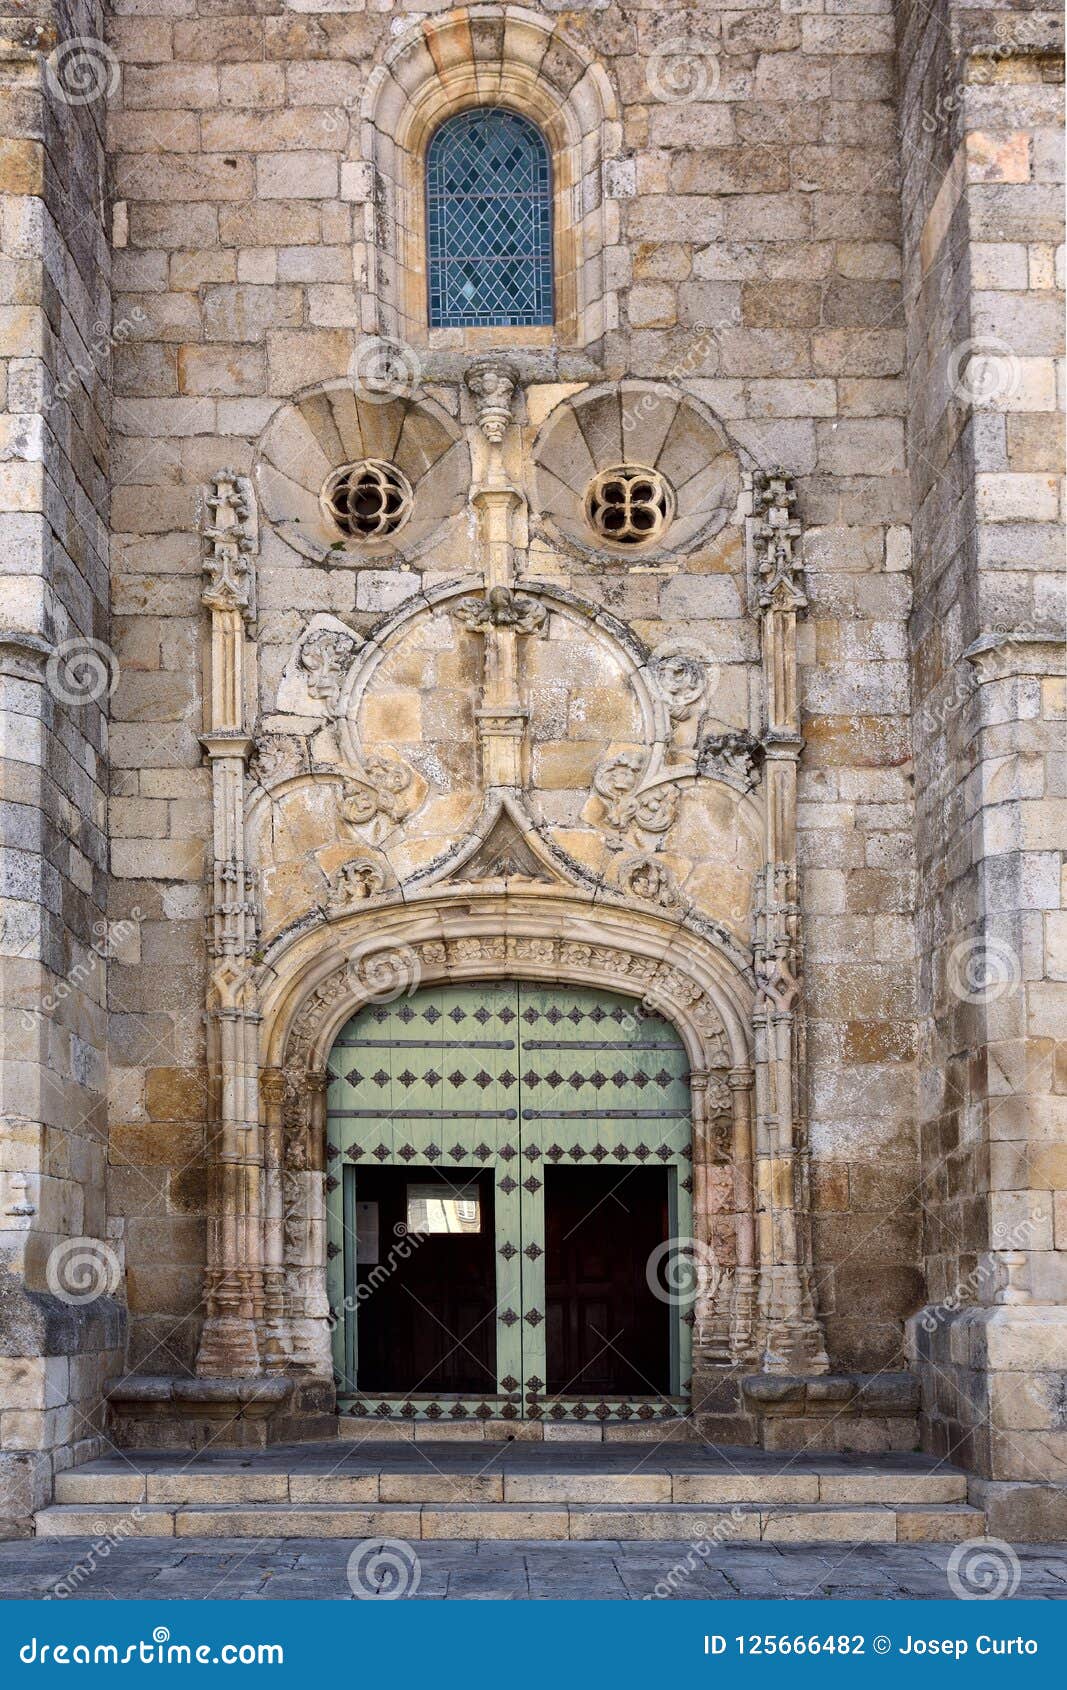 miguel church of freixo de espada a cinta, portugal